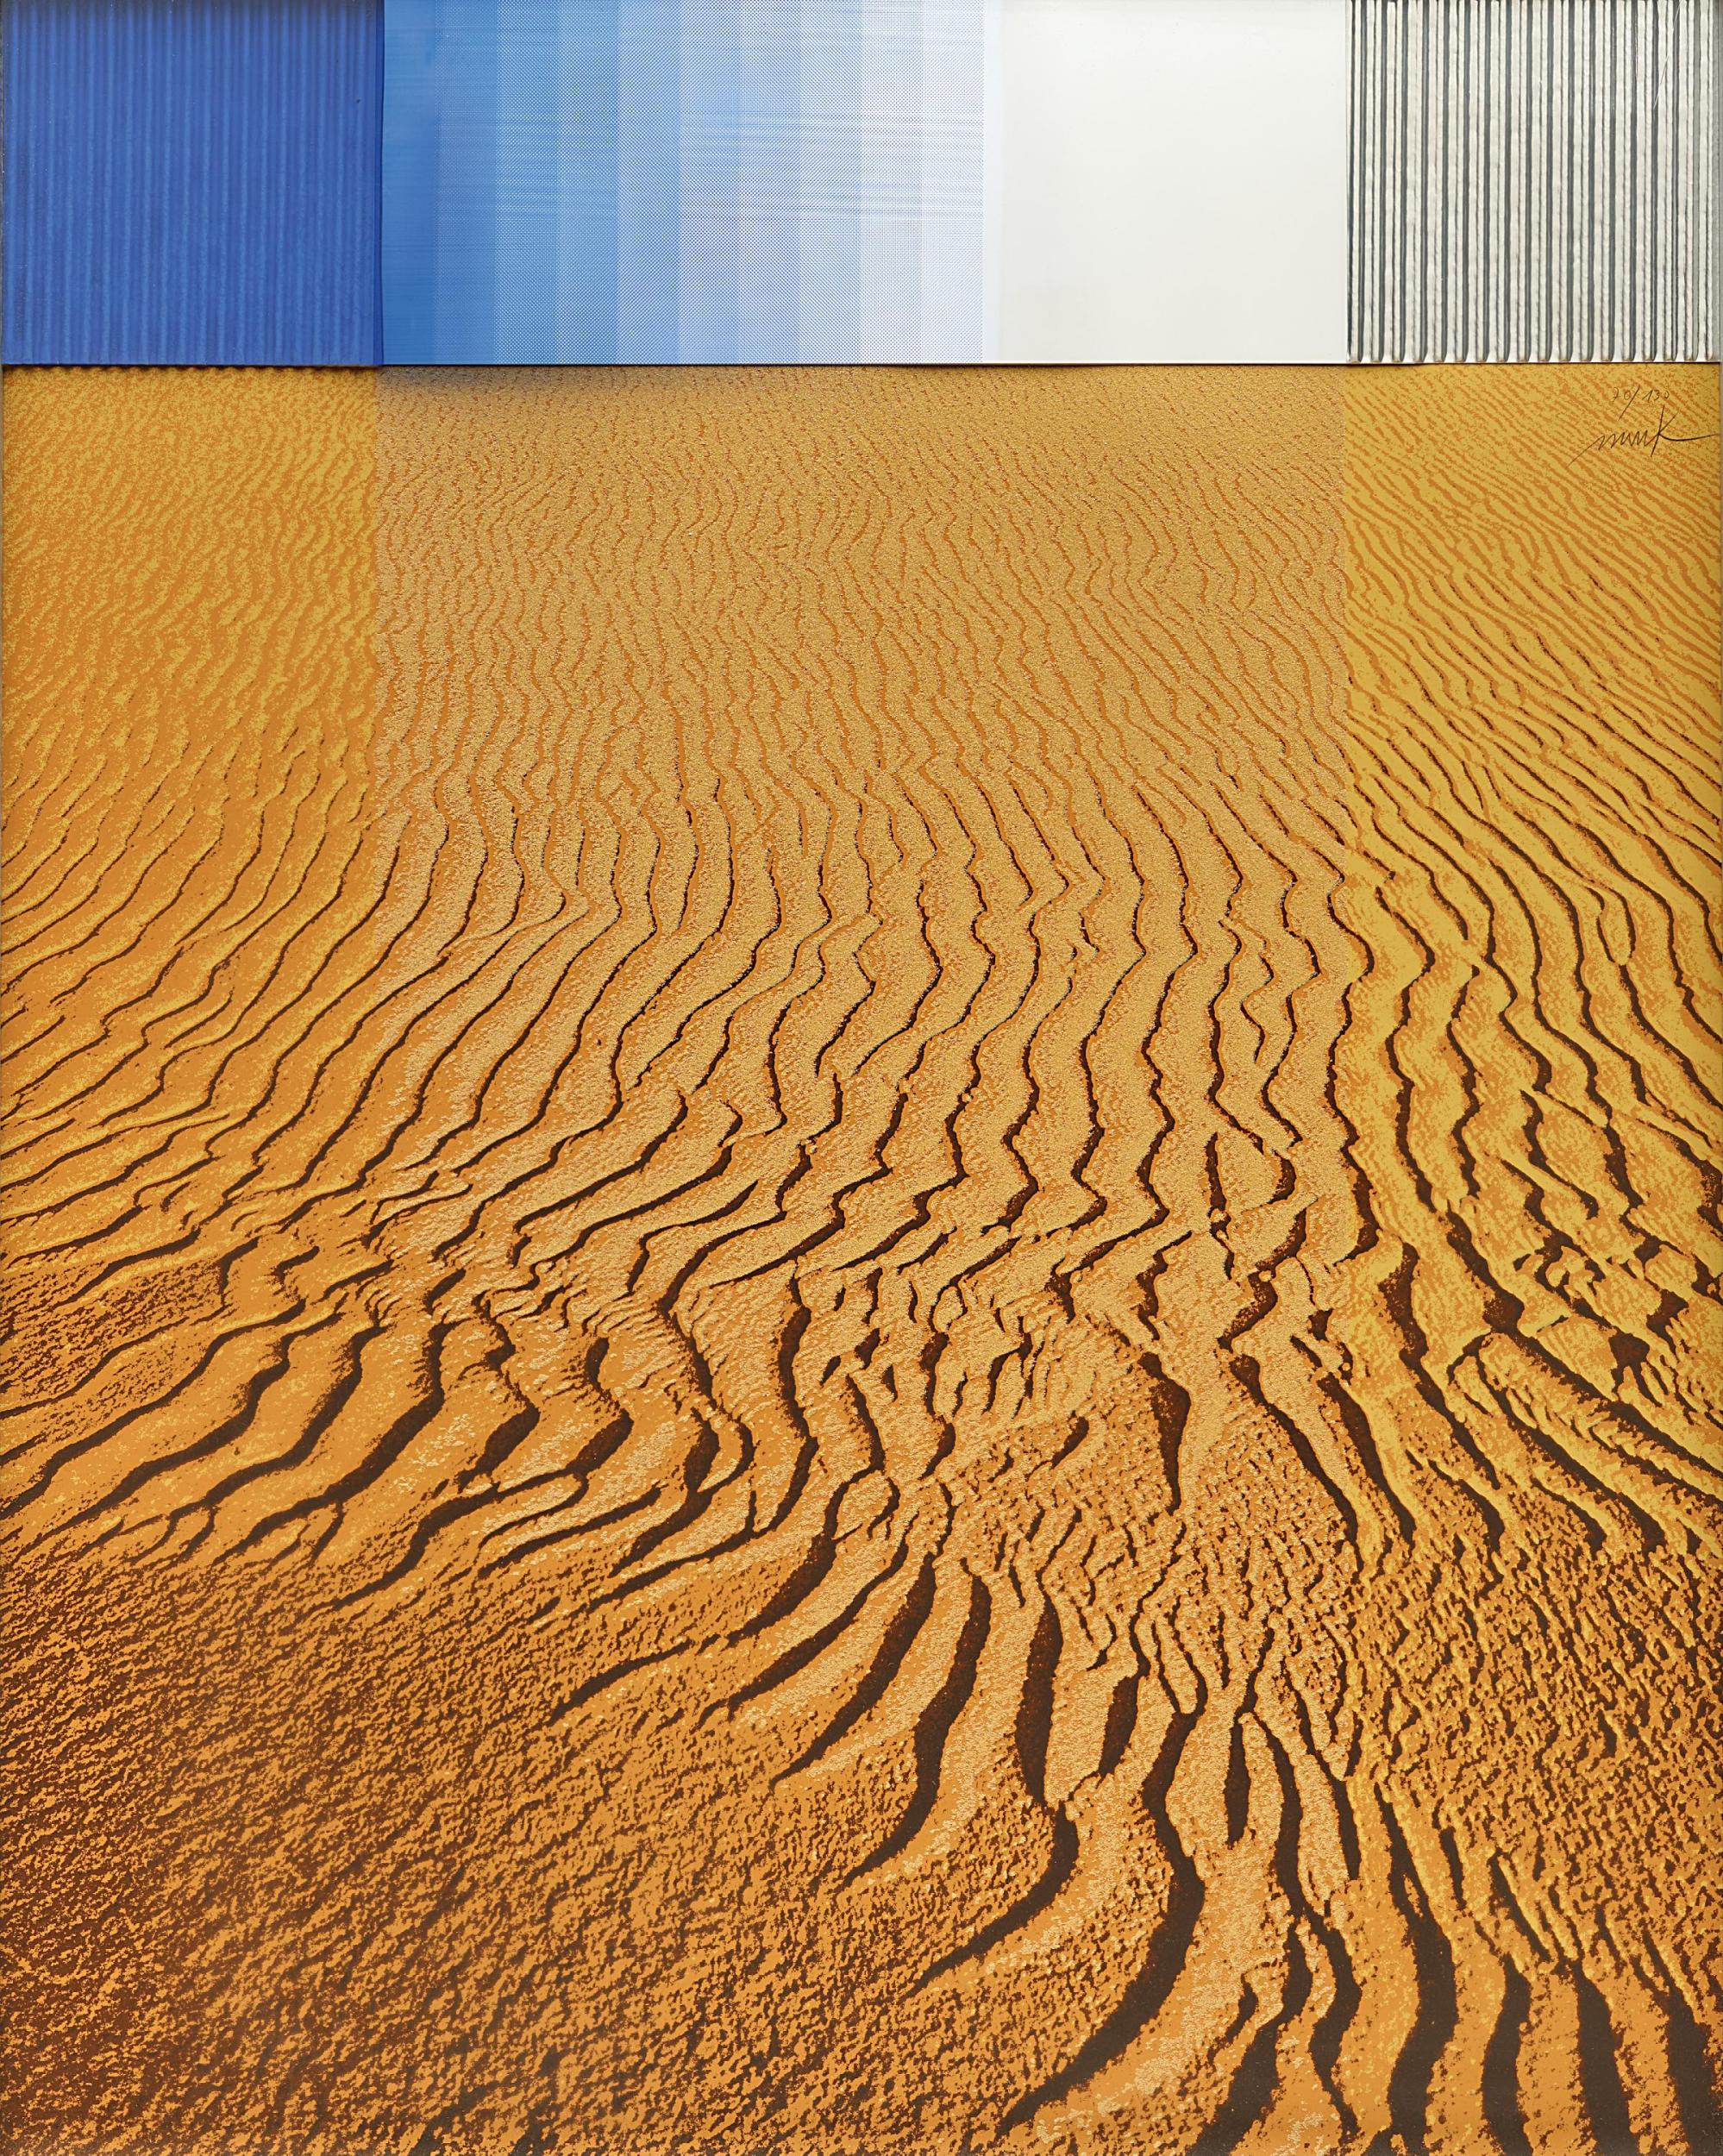 Heinz Mack: Sahara-Edition - Image 17 of 25